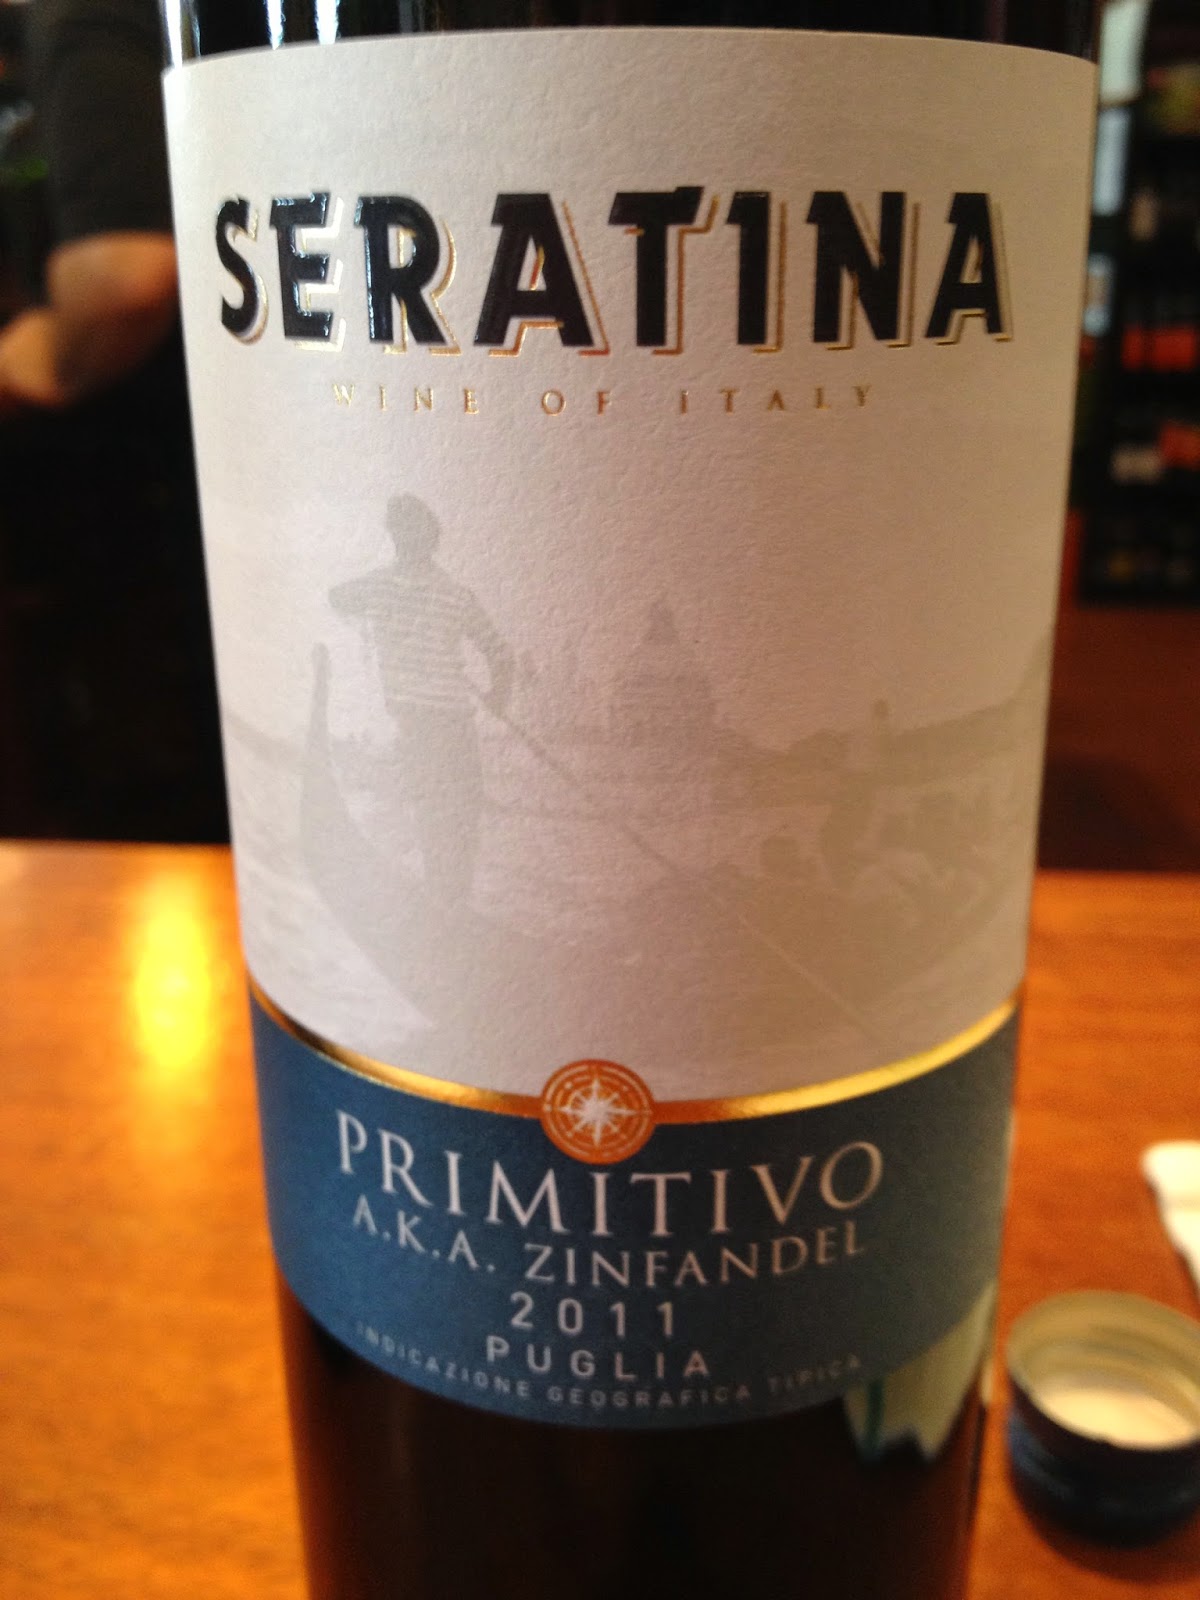 2011 Seratina Primitivo wine from Puglia